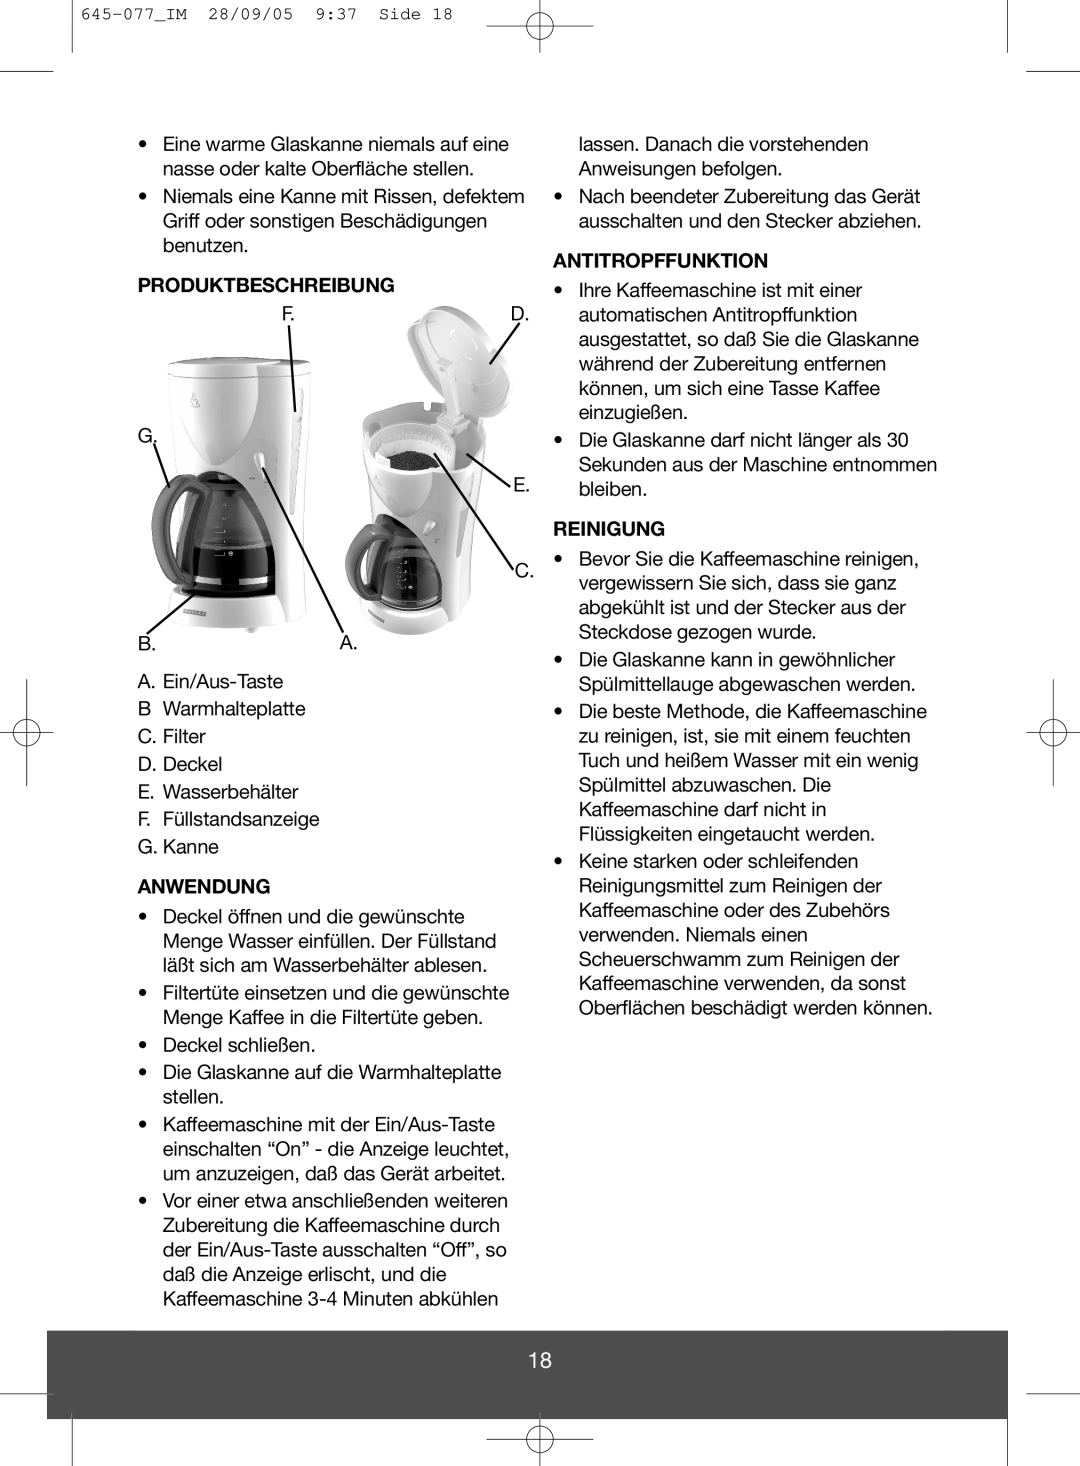 Melissa 645-077 manual Antitropffunktion, Produktbeschreibung, Reinigung, Anwendung 